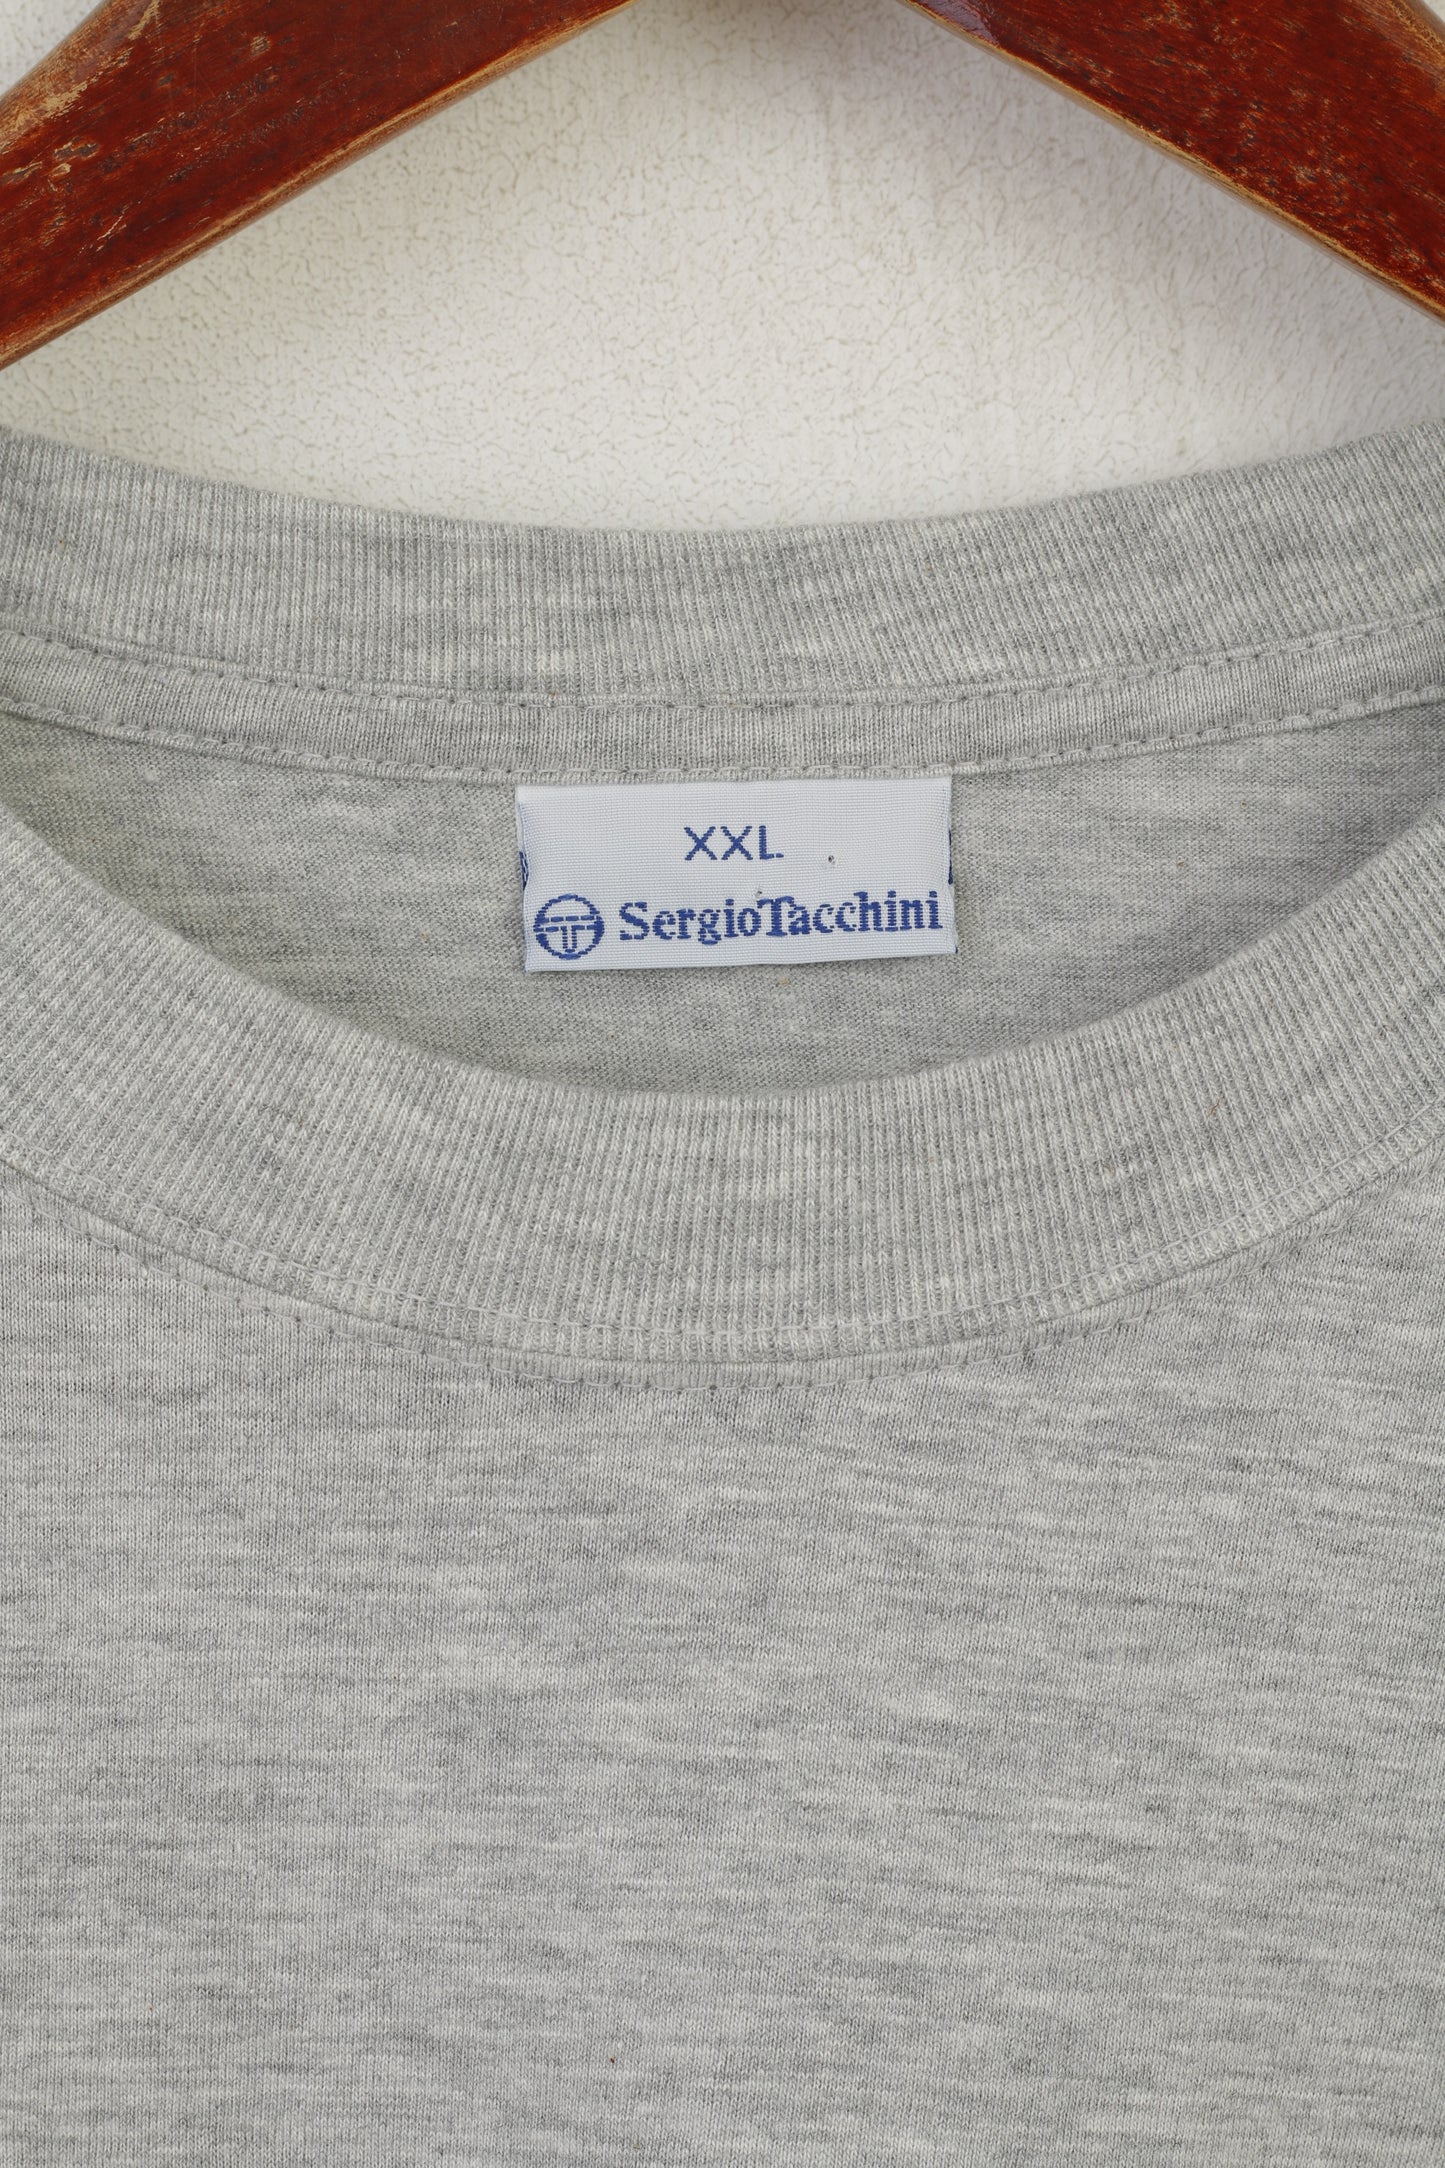 Sergio Tacchini Men XXL T-Shirt Gray Cotton Long Tall Graphic Logo Top